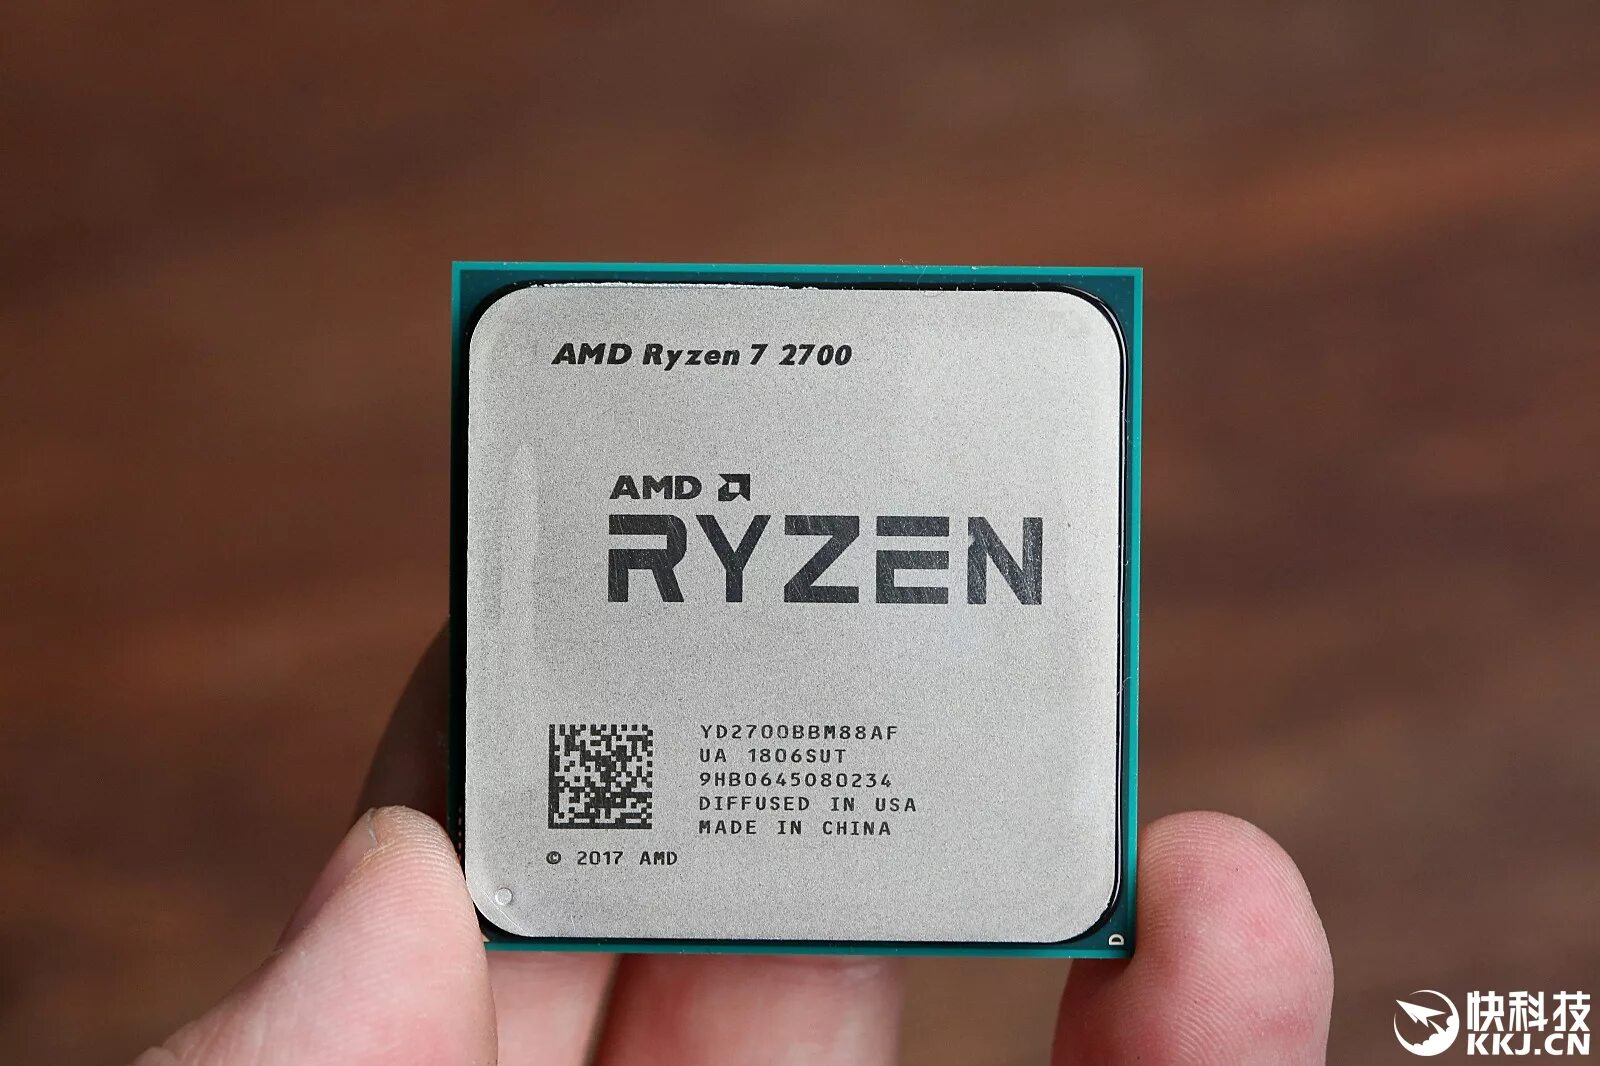 Ryzen 7 2700 купить. R7 2700. Ryzen 7 2700. Райзен 2700 OEM. AMD 2700x.